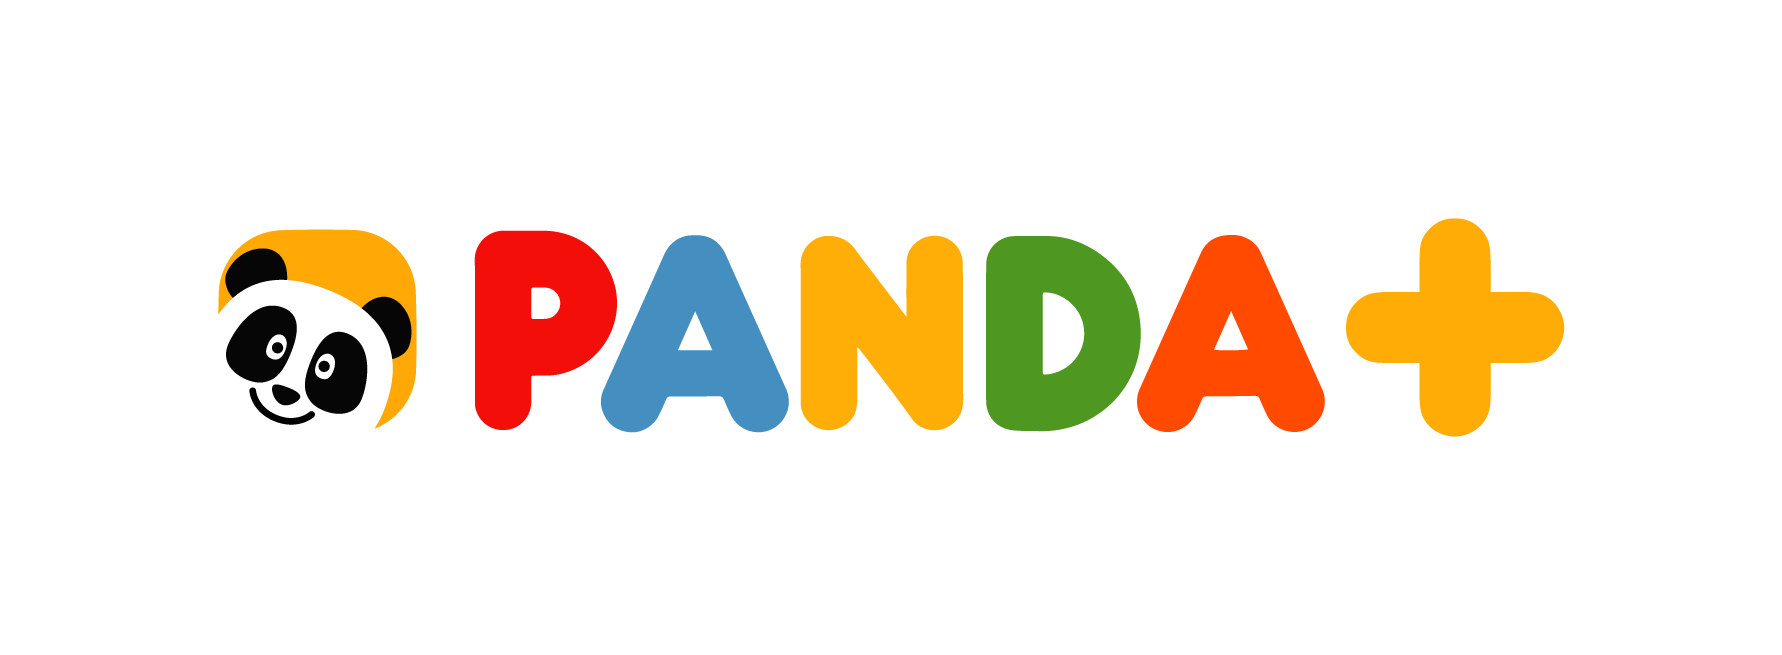 O Rancho - Canal Panda Portugal